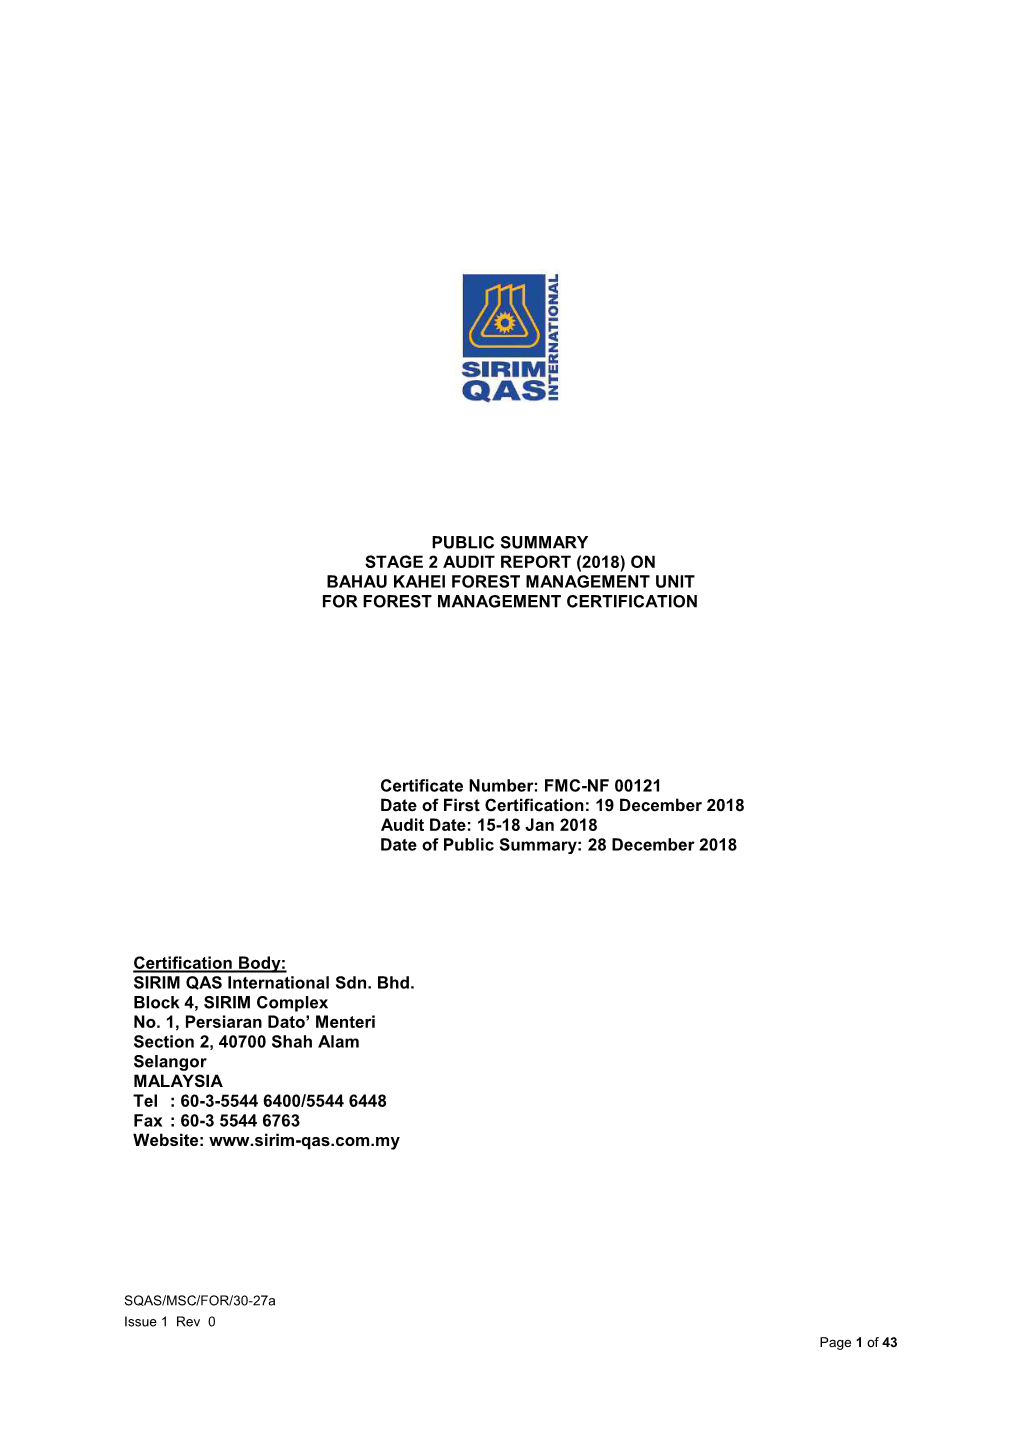 Public Summary Stage 2 Audit Report (2018) on Bahau Kahei Forest Management Unit for Forest Management Certification